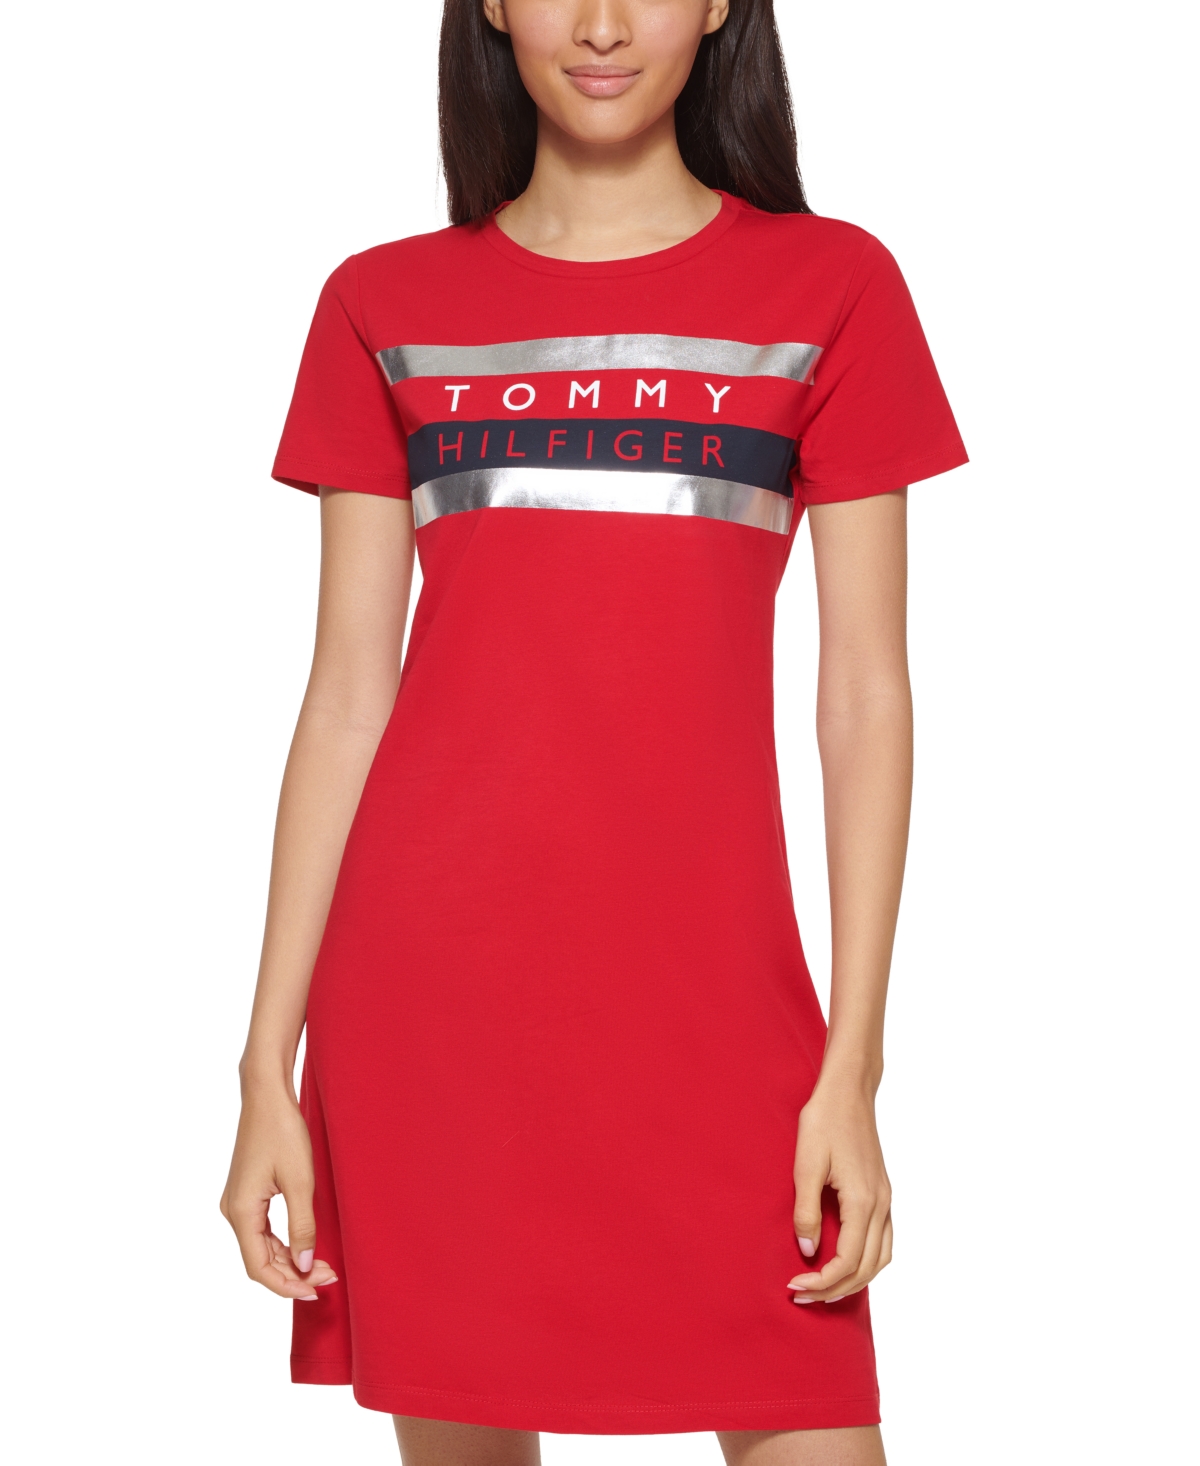 Tommy Hilfiger Women's Short-Sleeve Foil Logo Dress